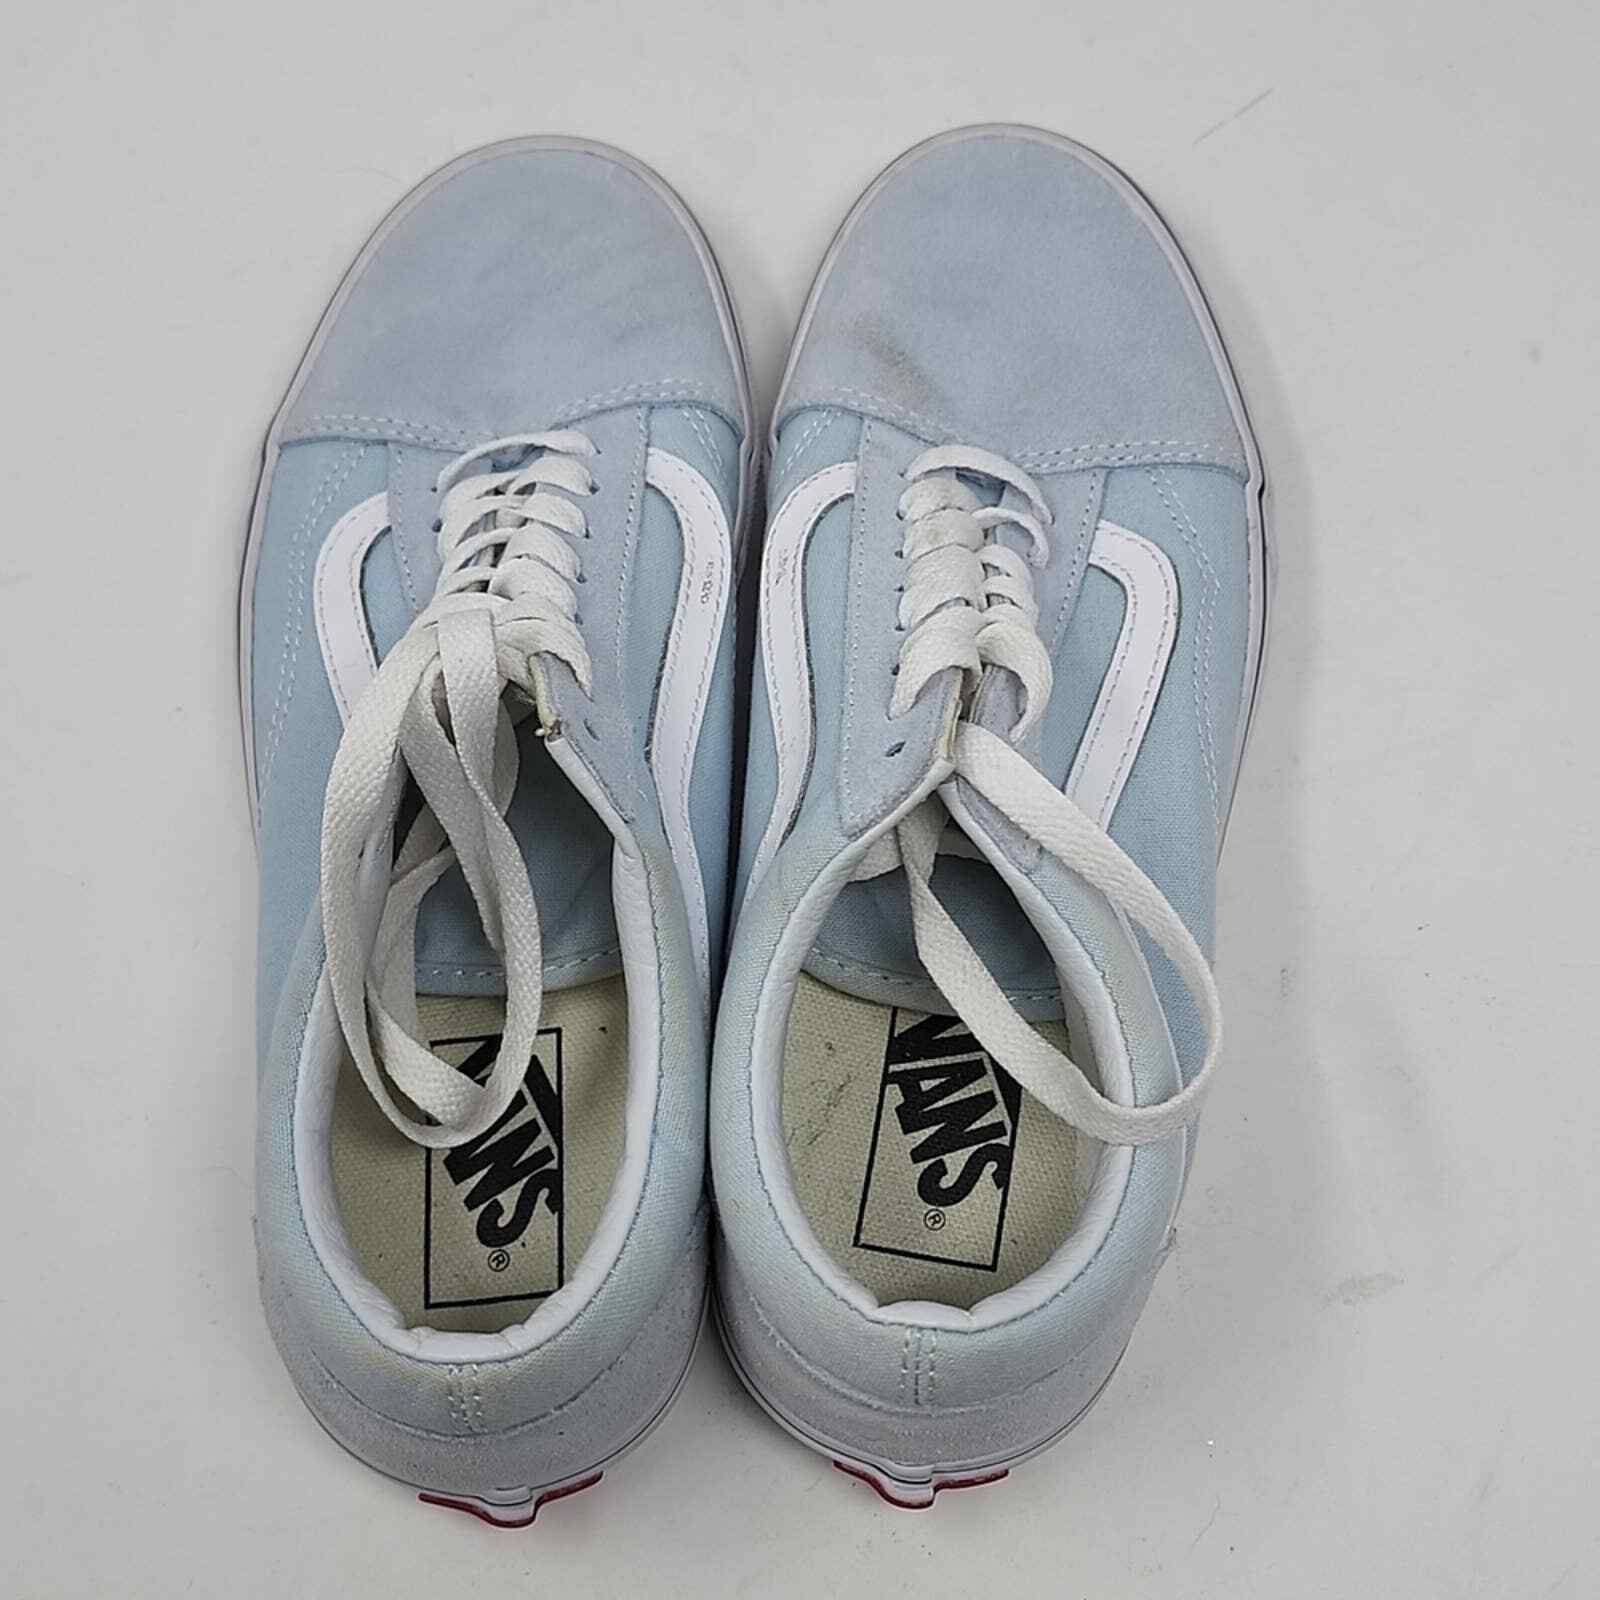 Vans Old School Unisex Sneakers Sude Blue Size 8.5 - image 6